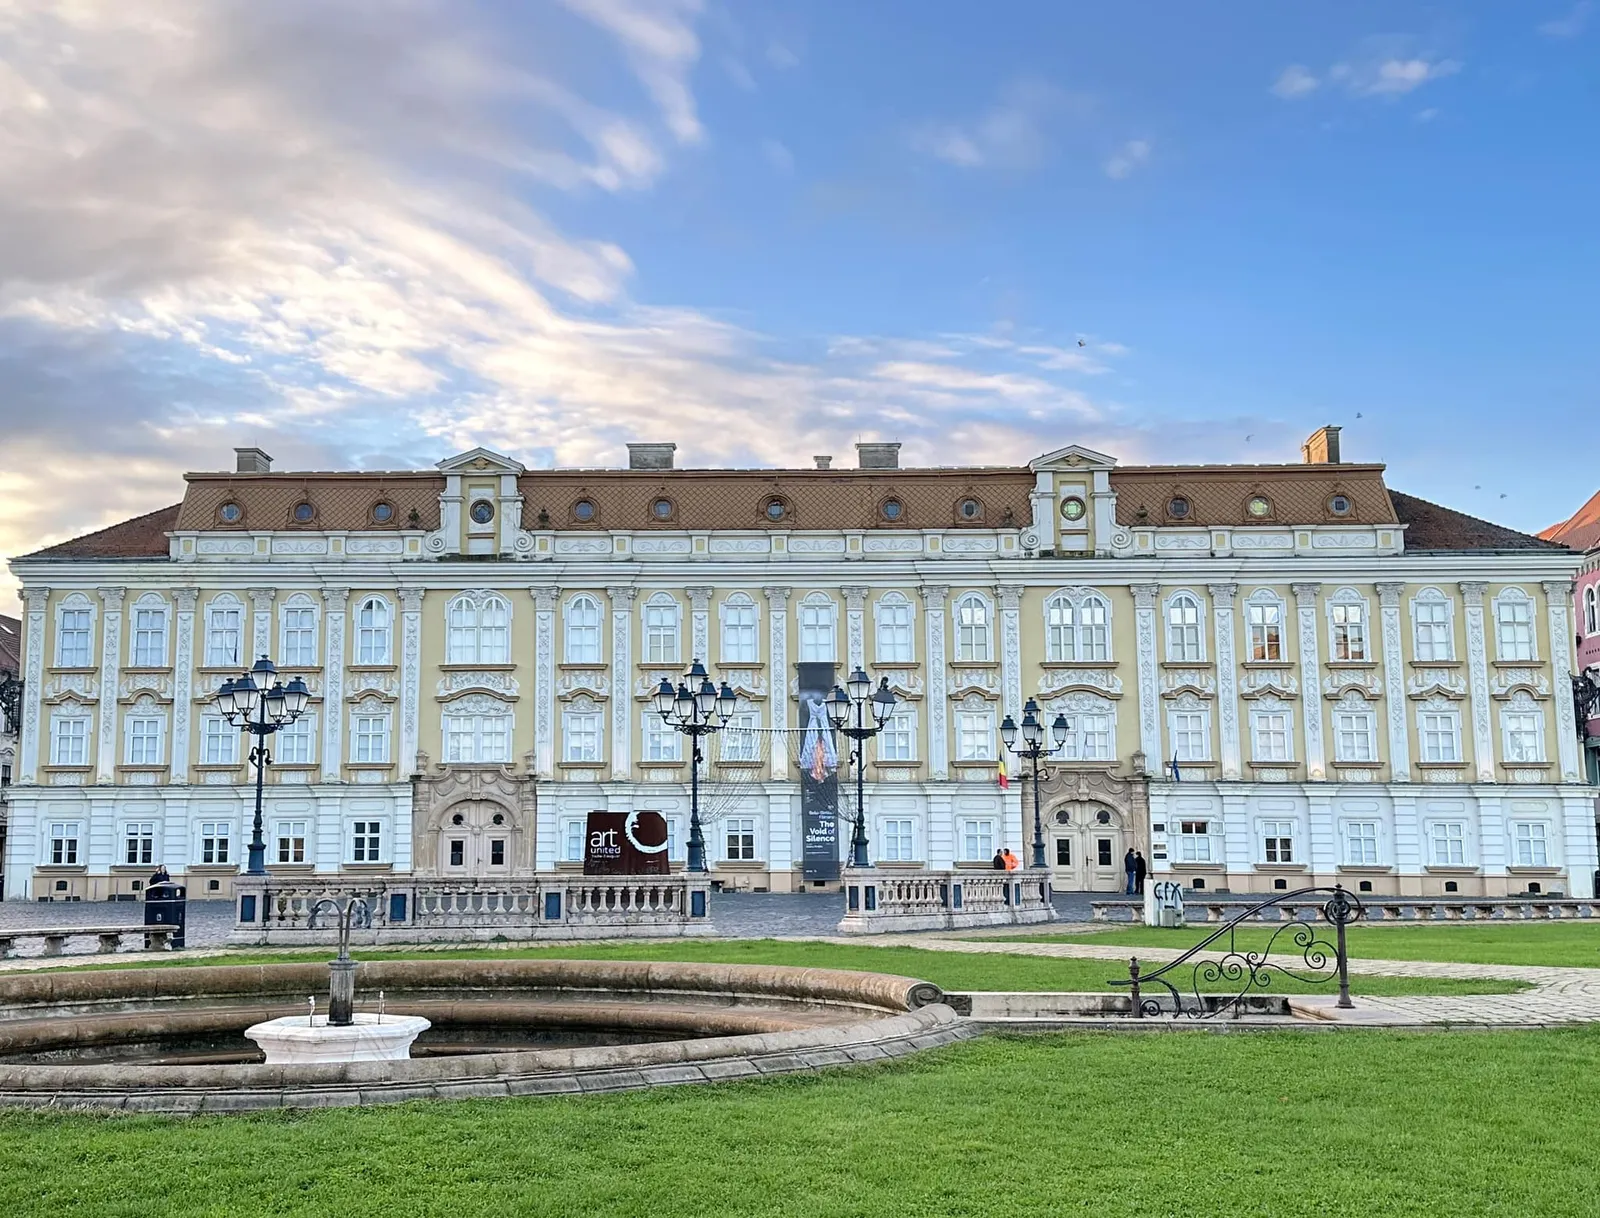 The Timisoara National Museum of Art